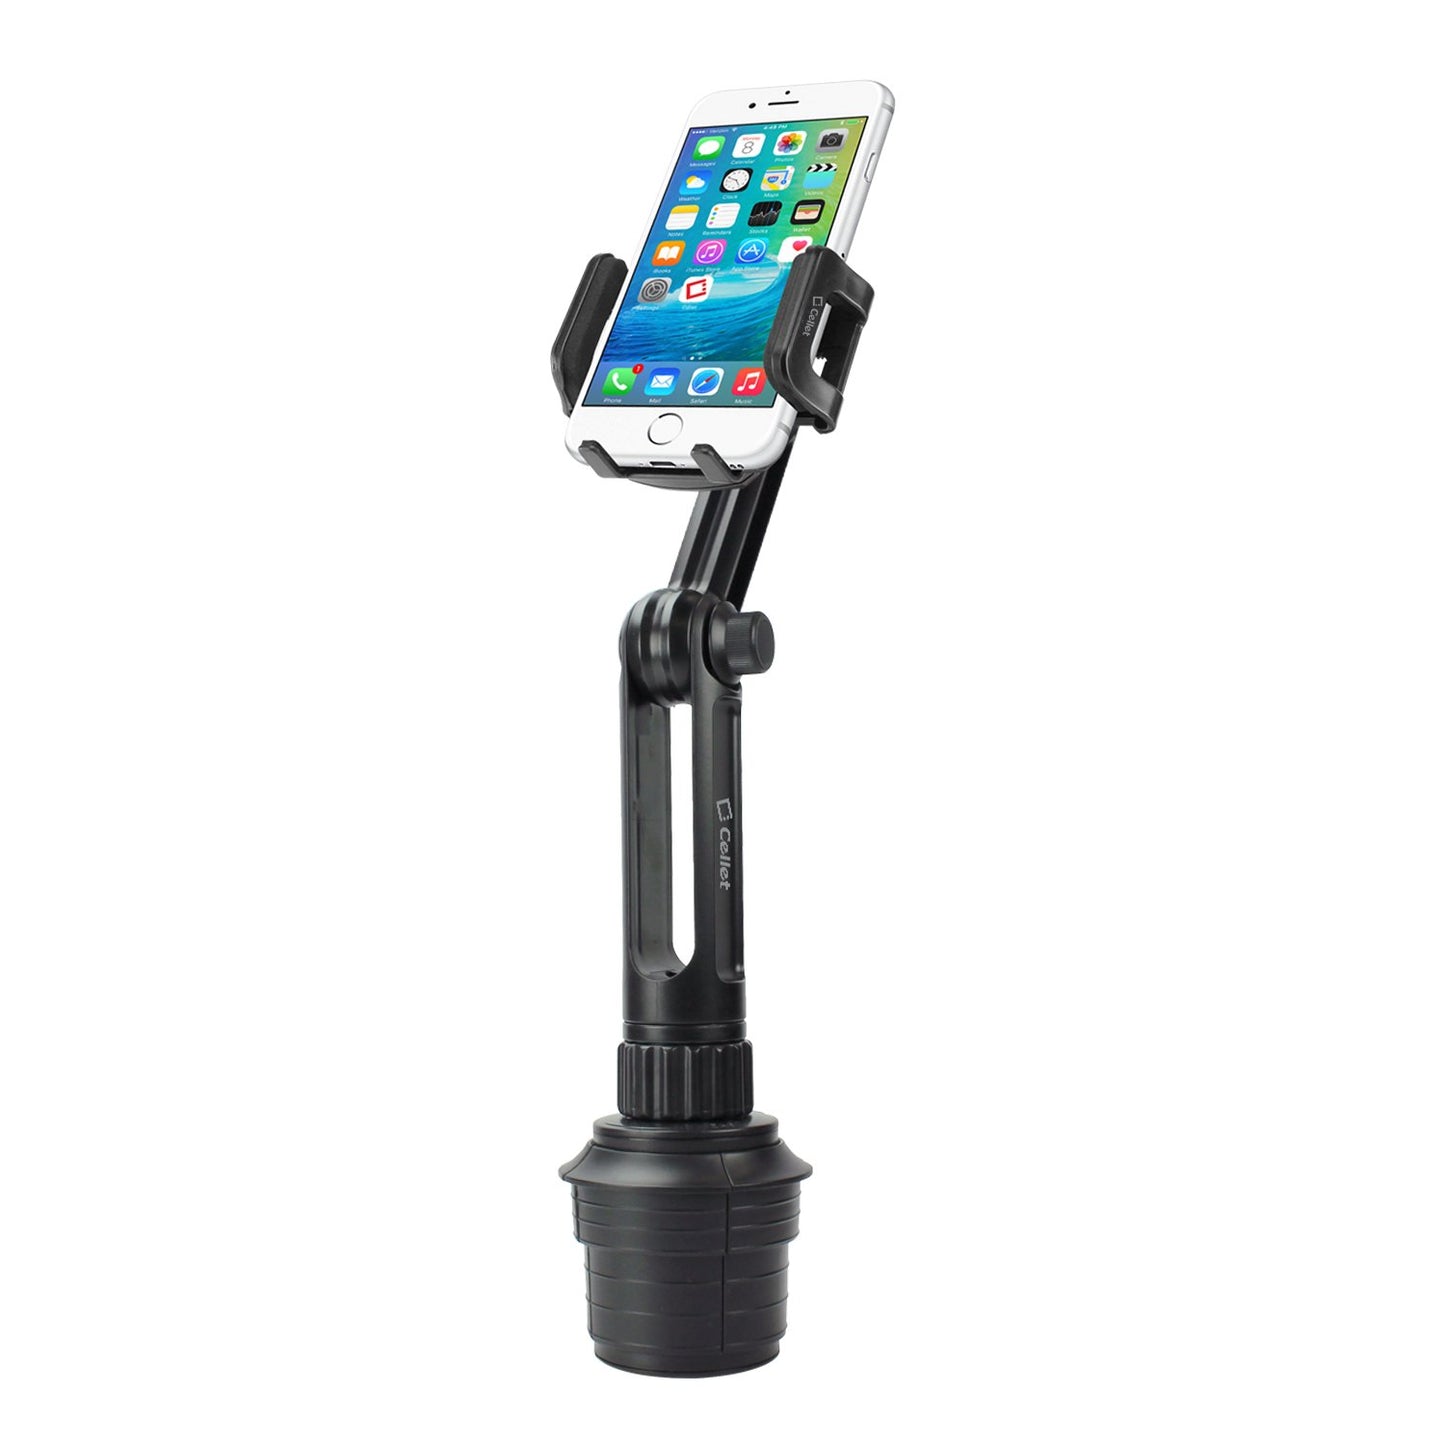 Cellet PH650 Car Cup Holder Smartphone Mount, Durable Adjustable Phone Cradle